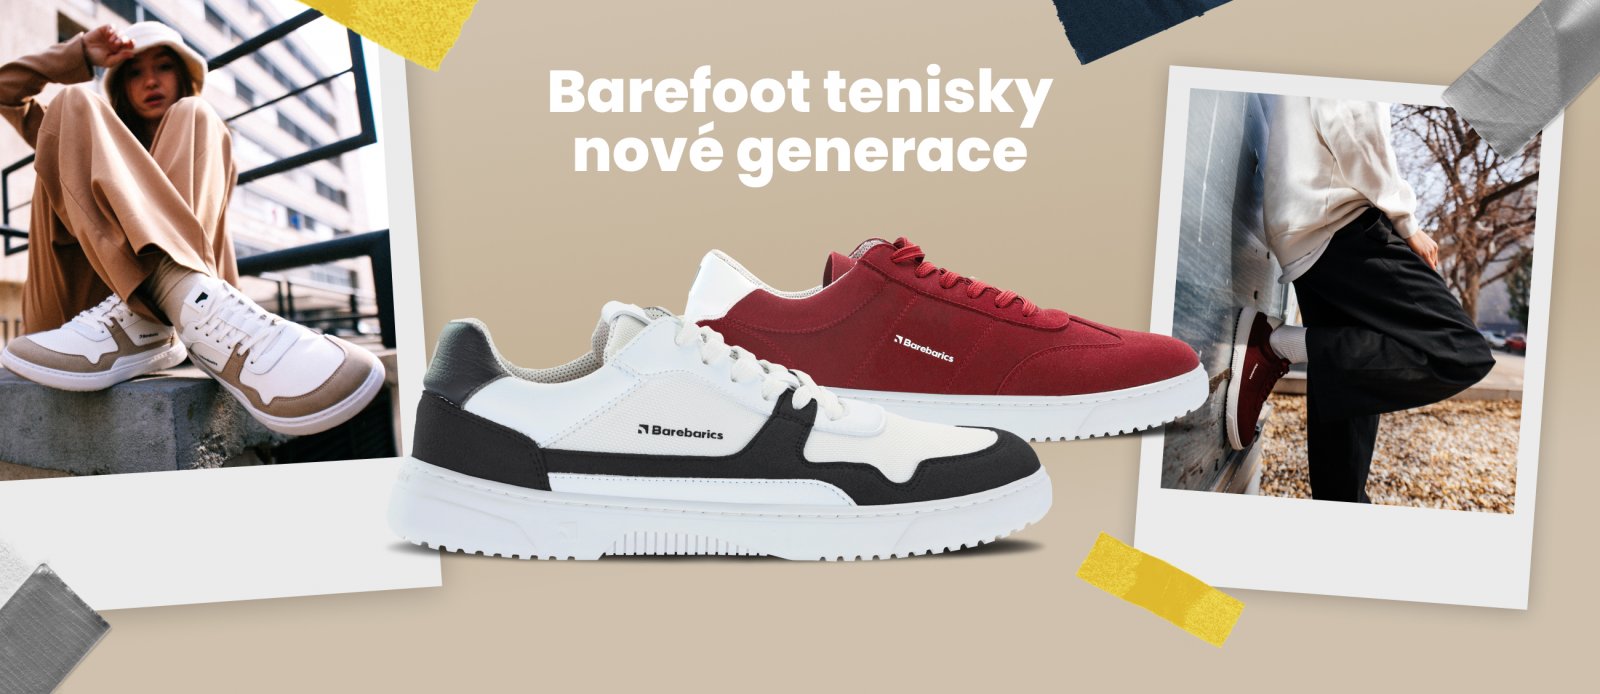 Barefoot tenisky nové generace | Barebarics